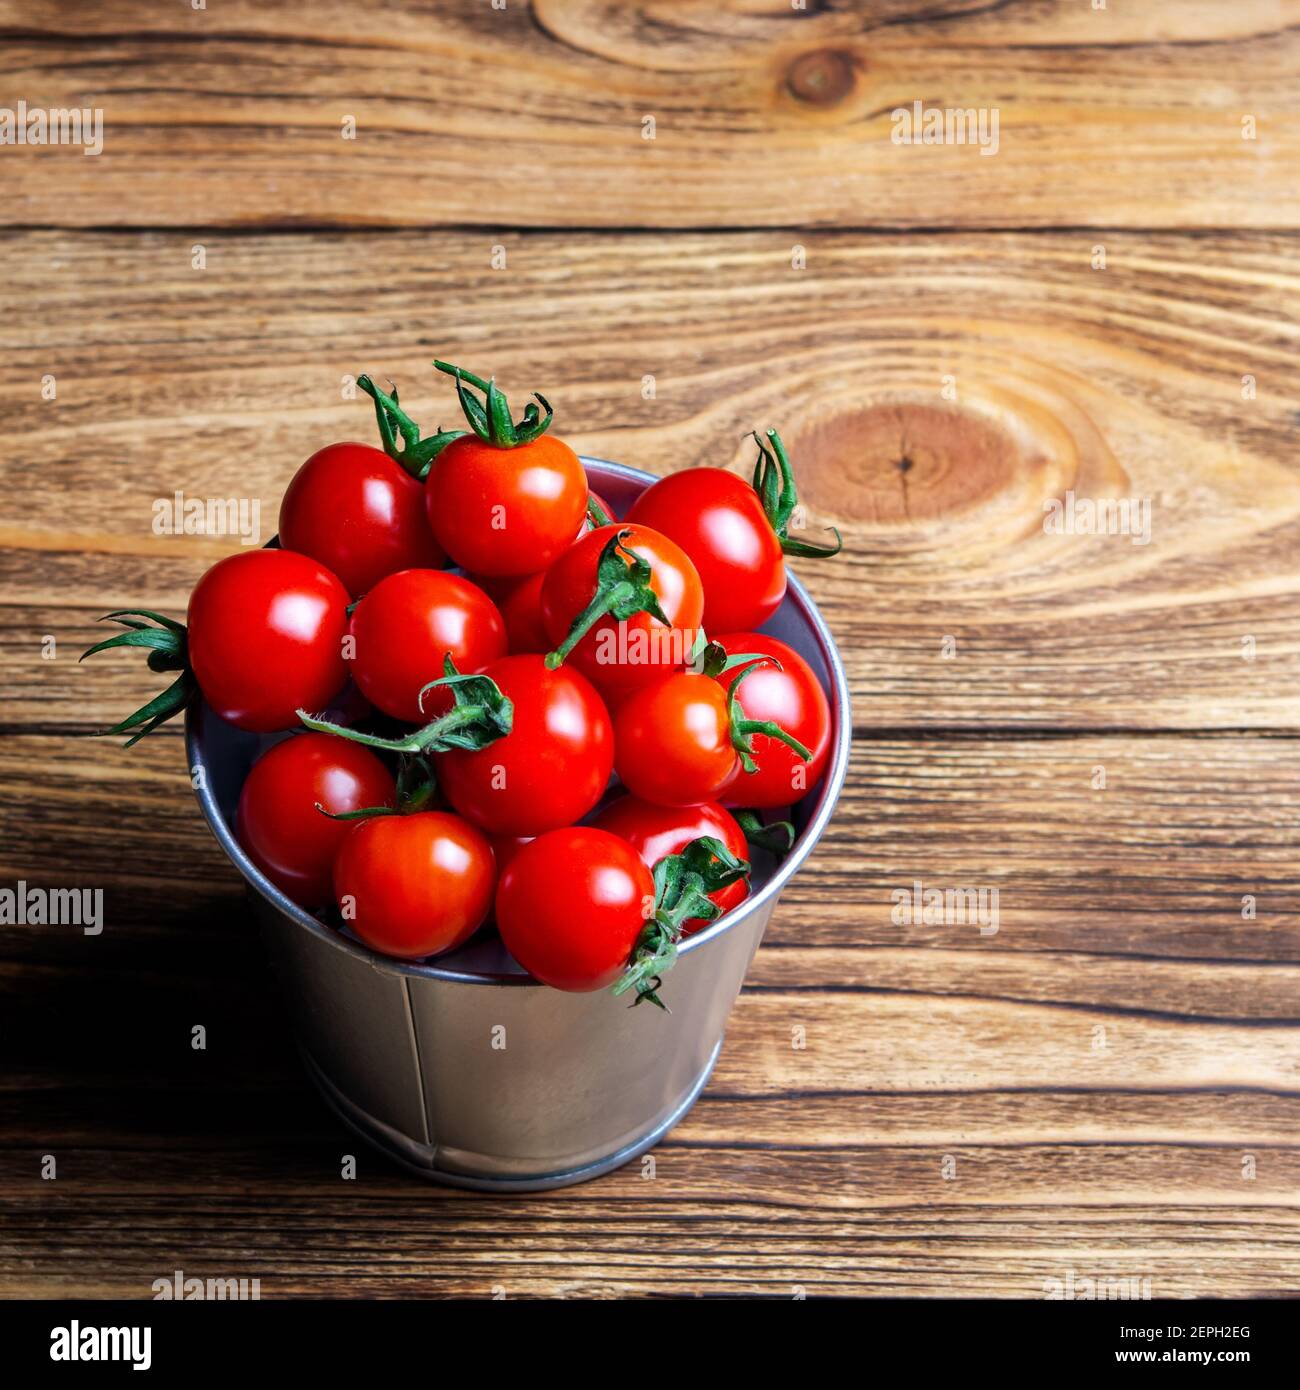 pequeño cubo de tomates cherry rojos frescos sobre una mesa de madera. Vista superior. Cosecha. Espacio natural de la comida Foto de stock